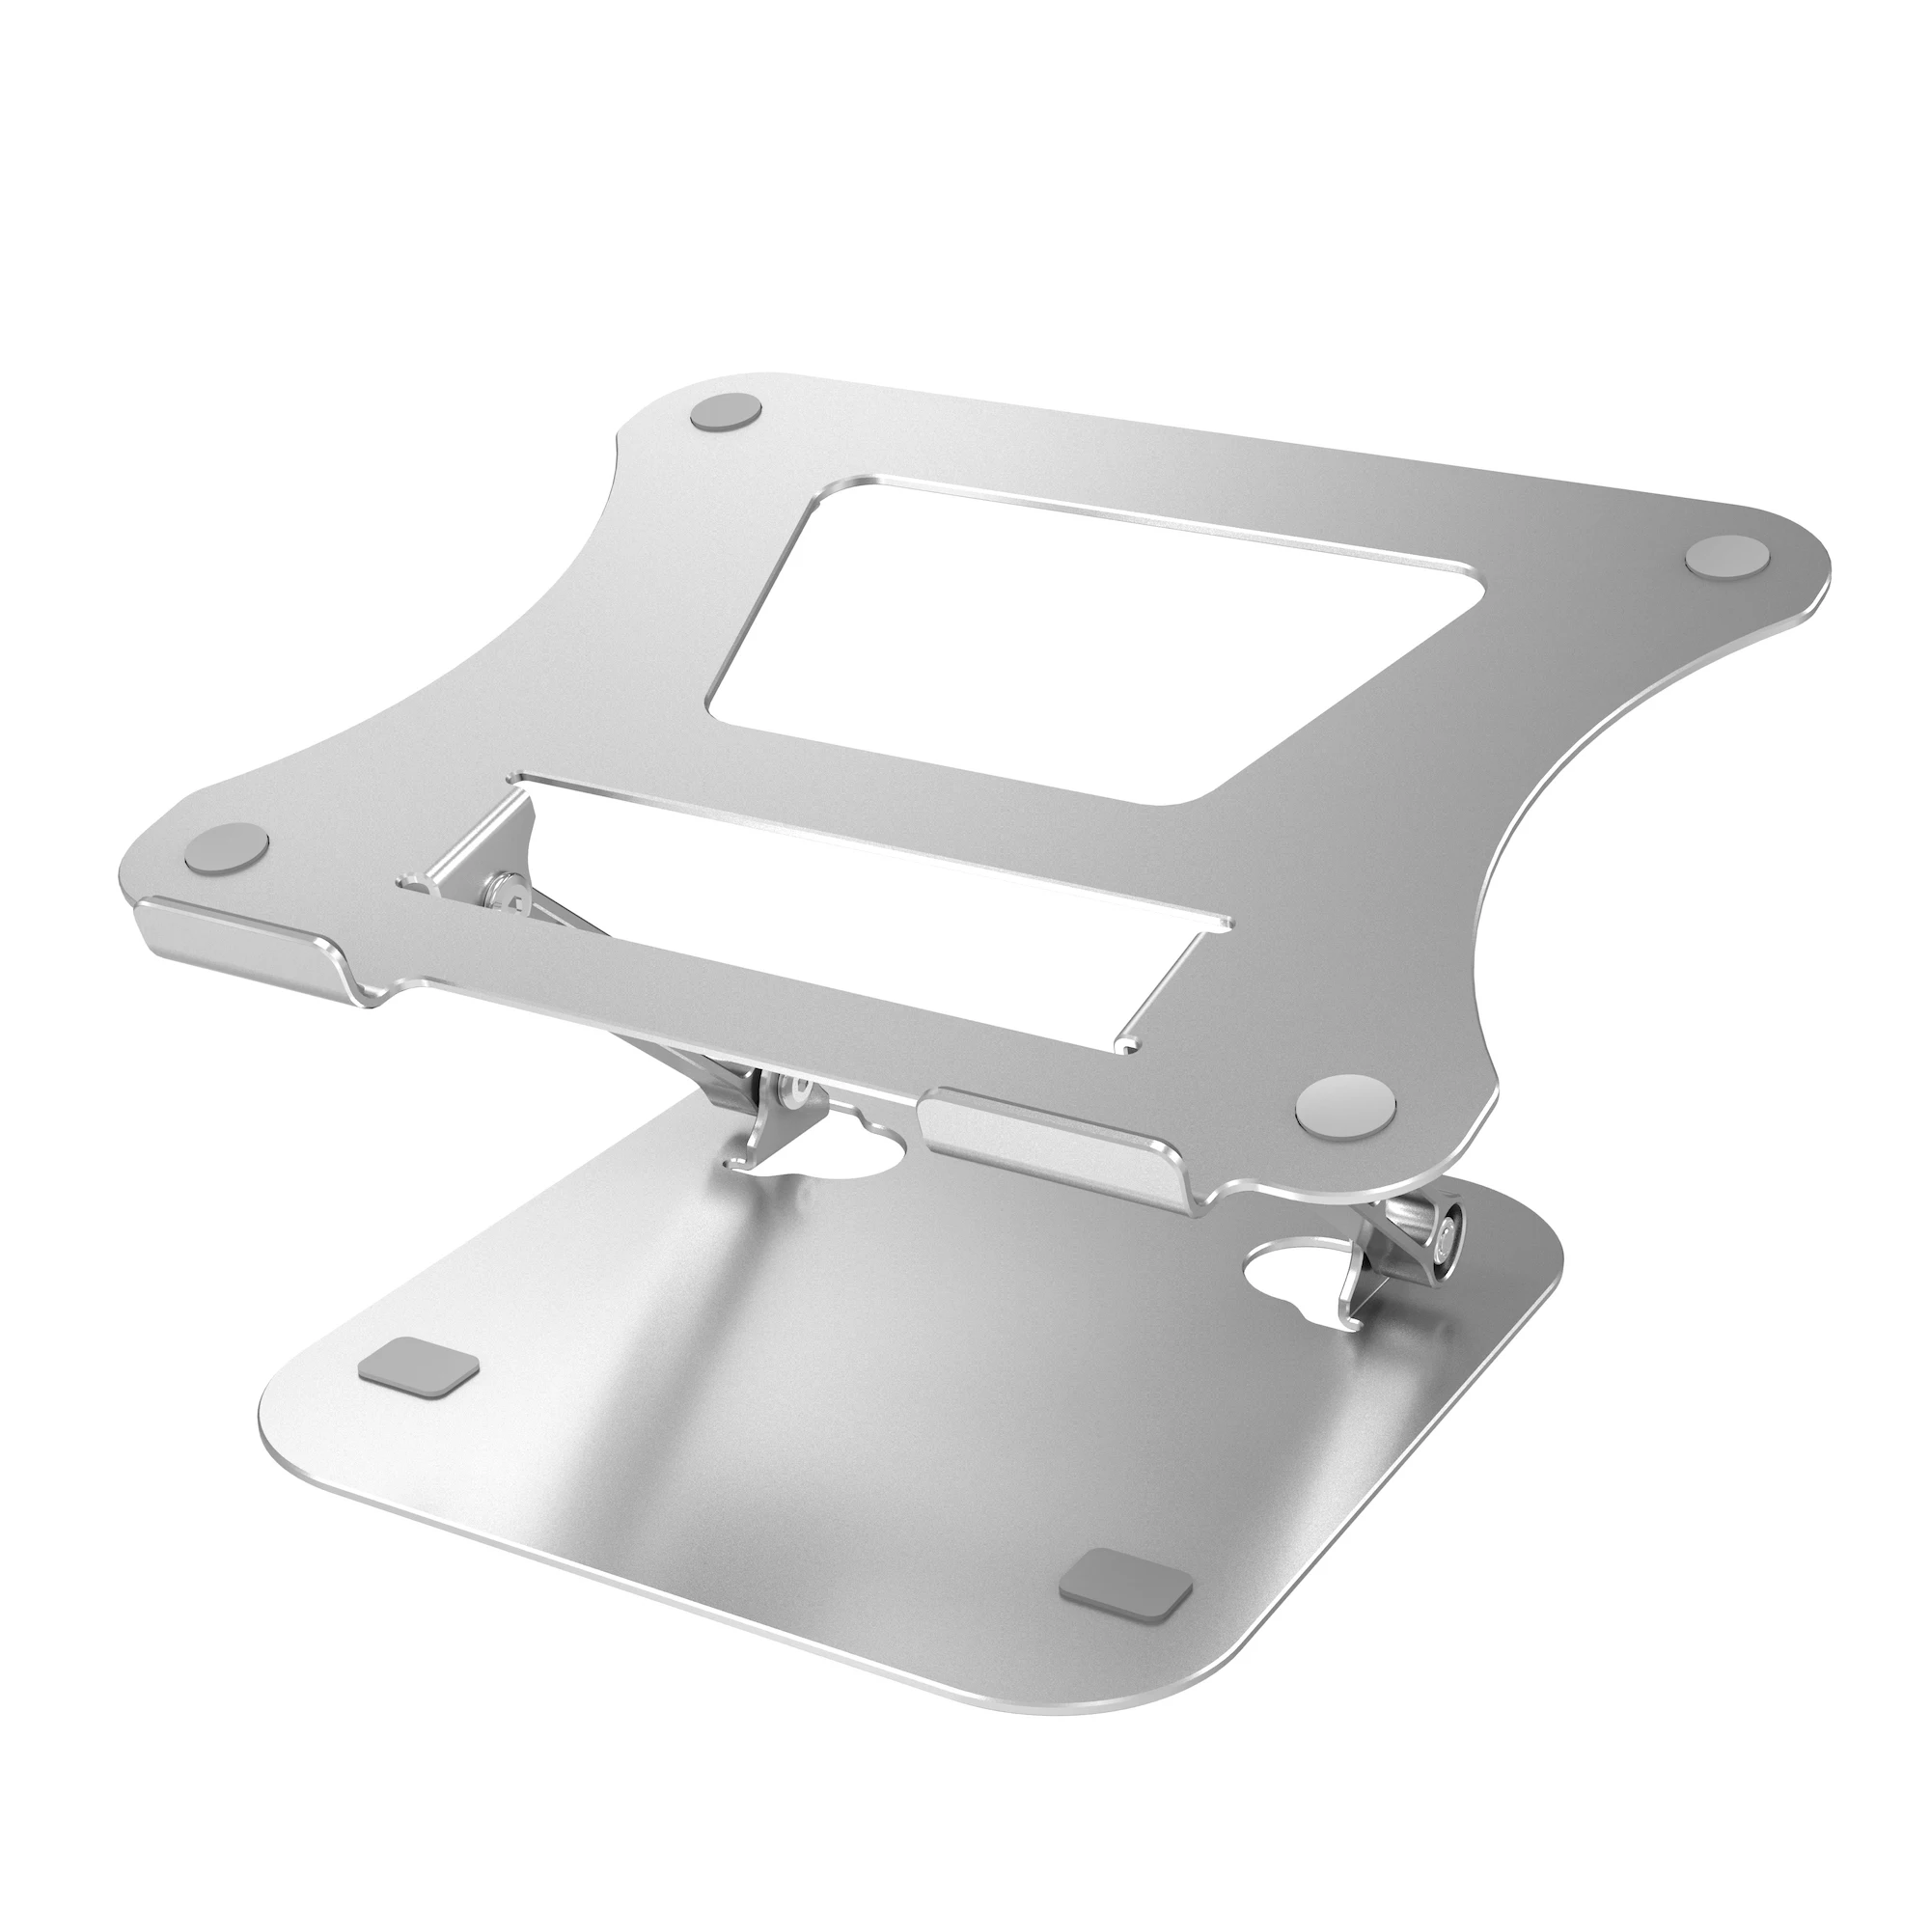 

IKATAK New Ergonomic Adjustable Portable Desktop Aluminium Laptop Stand Foldable, Silver